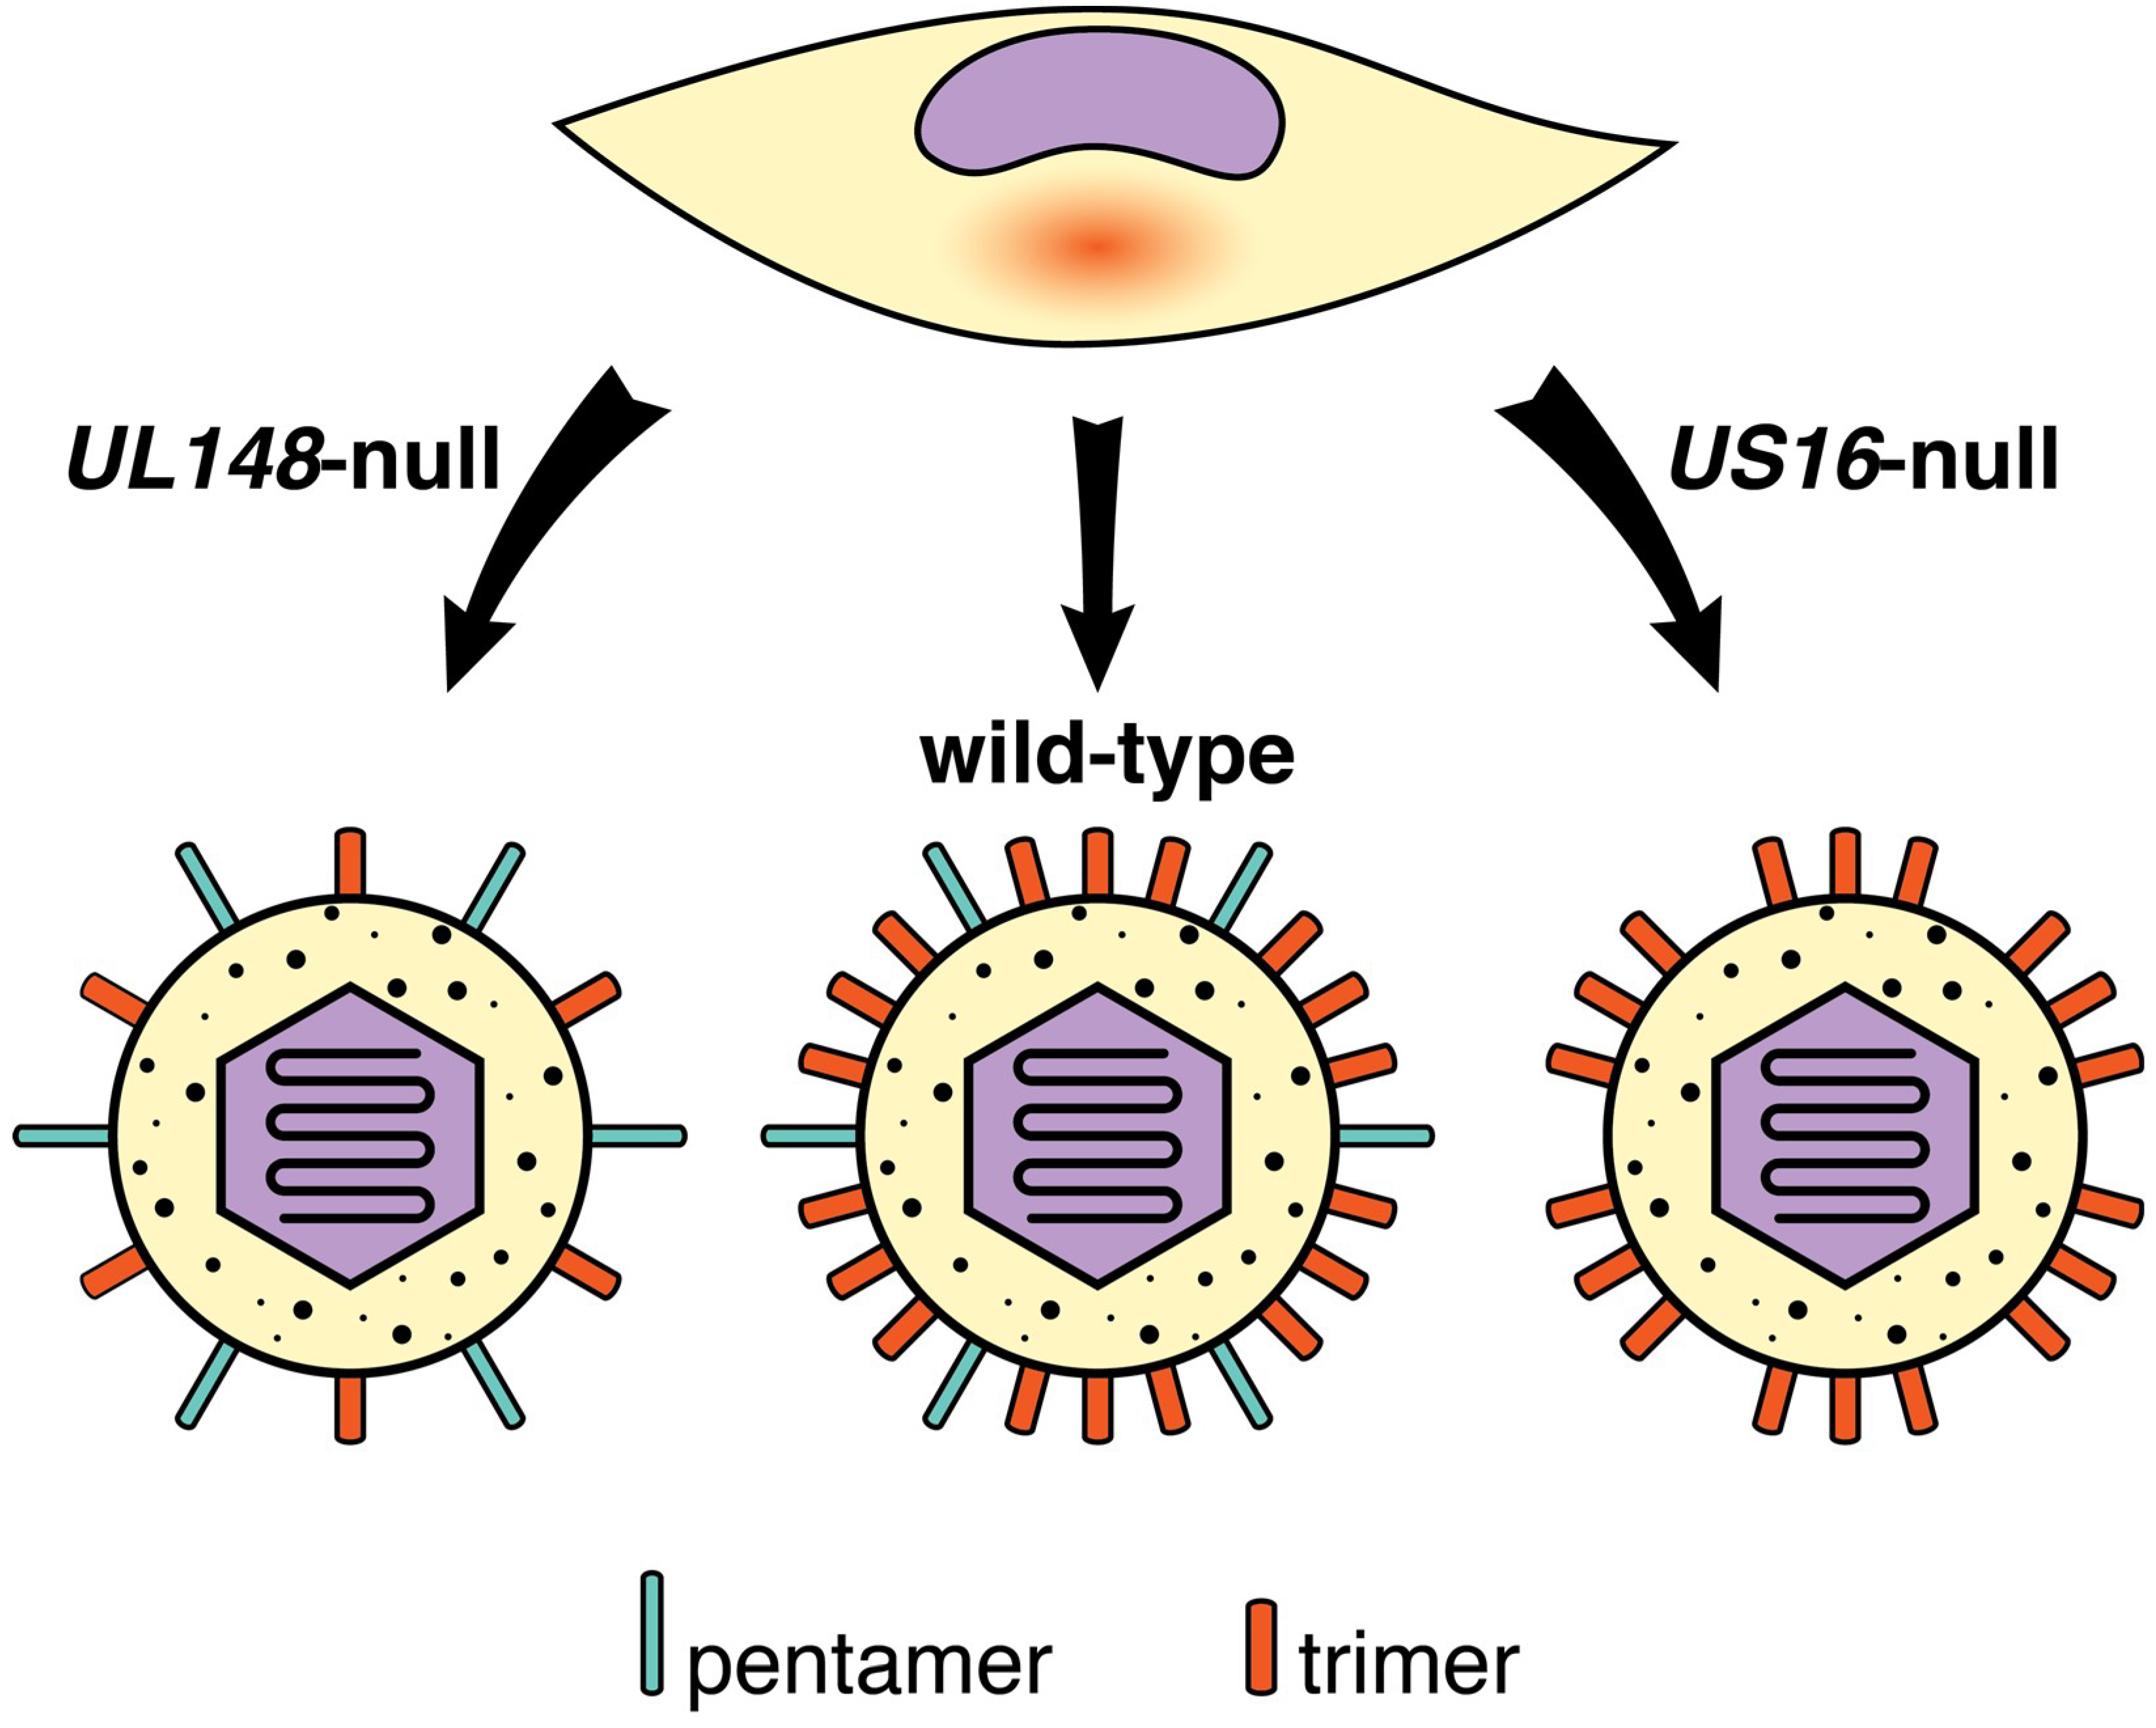 Cytomegalovirus цикл жизни. Тропизм вируса это. Ways of transmission of cytomegalovirus infection. Host specificity and Tissue tropism of viruses.